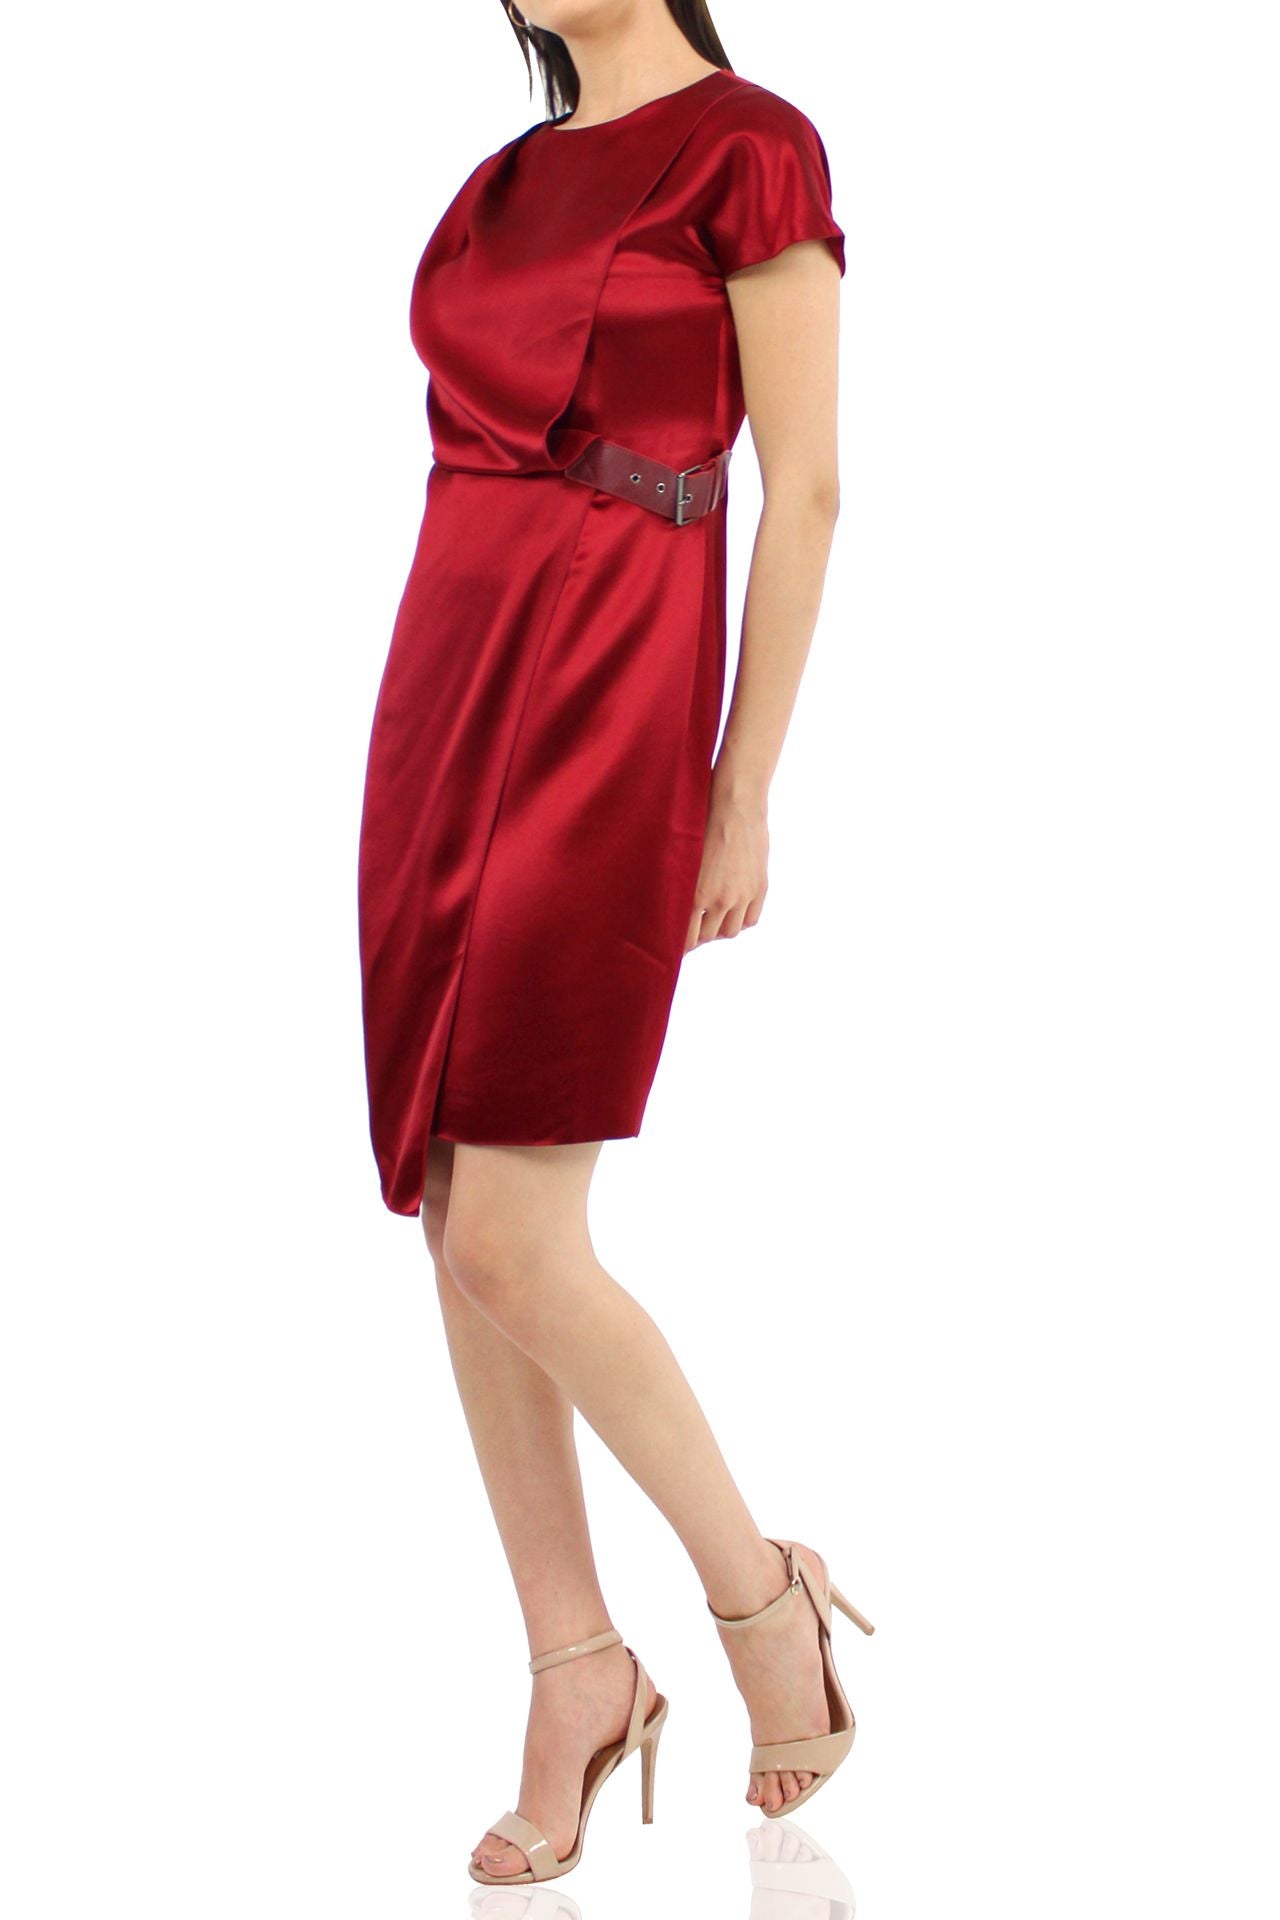 Designer-Mini-Belted-Dress-In-Red-By-Kyle-Richard